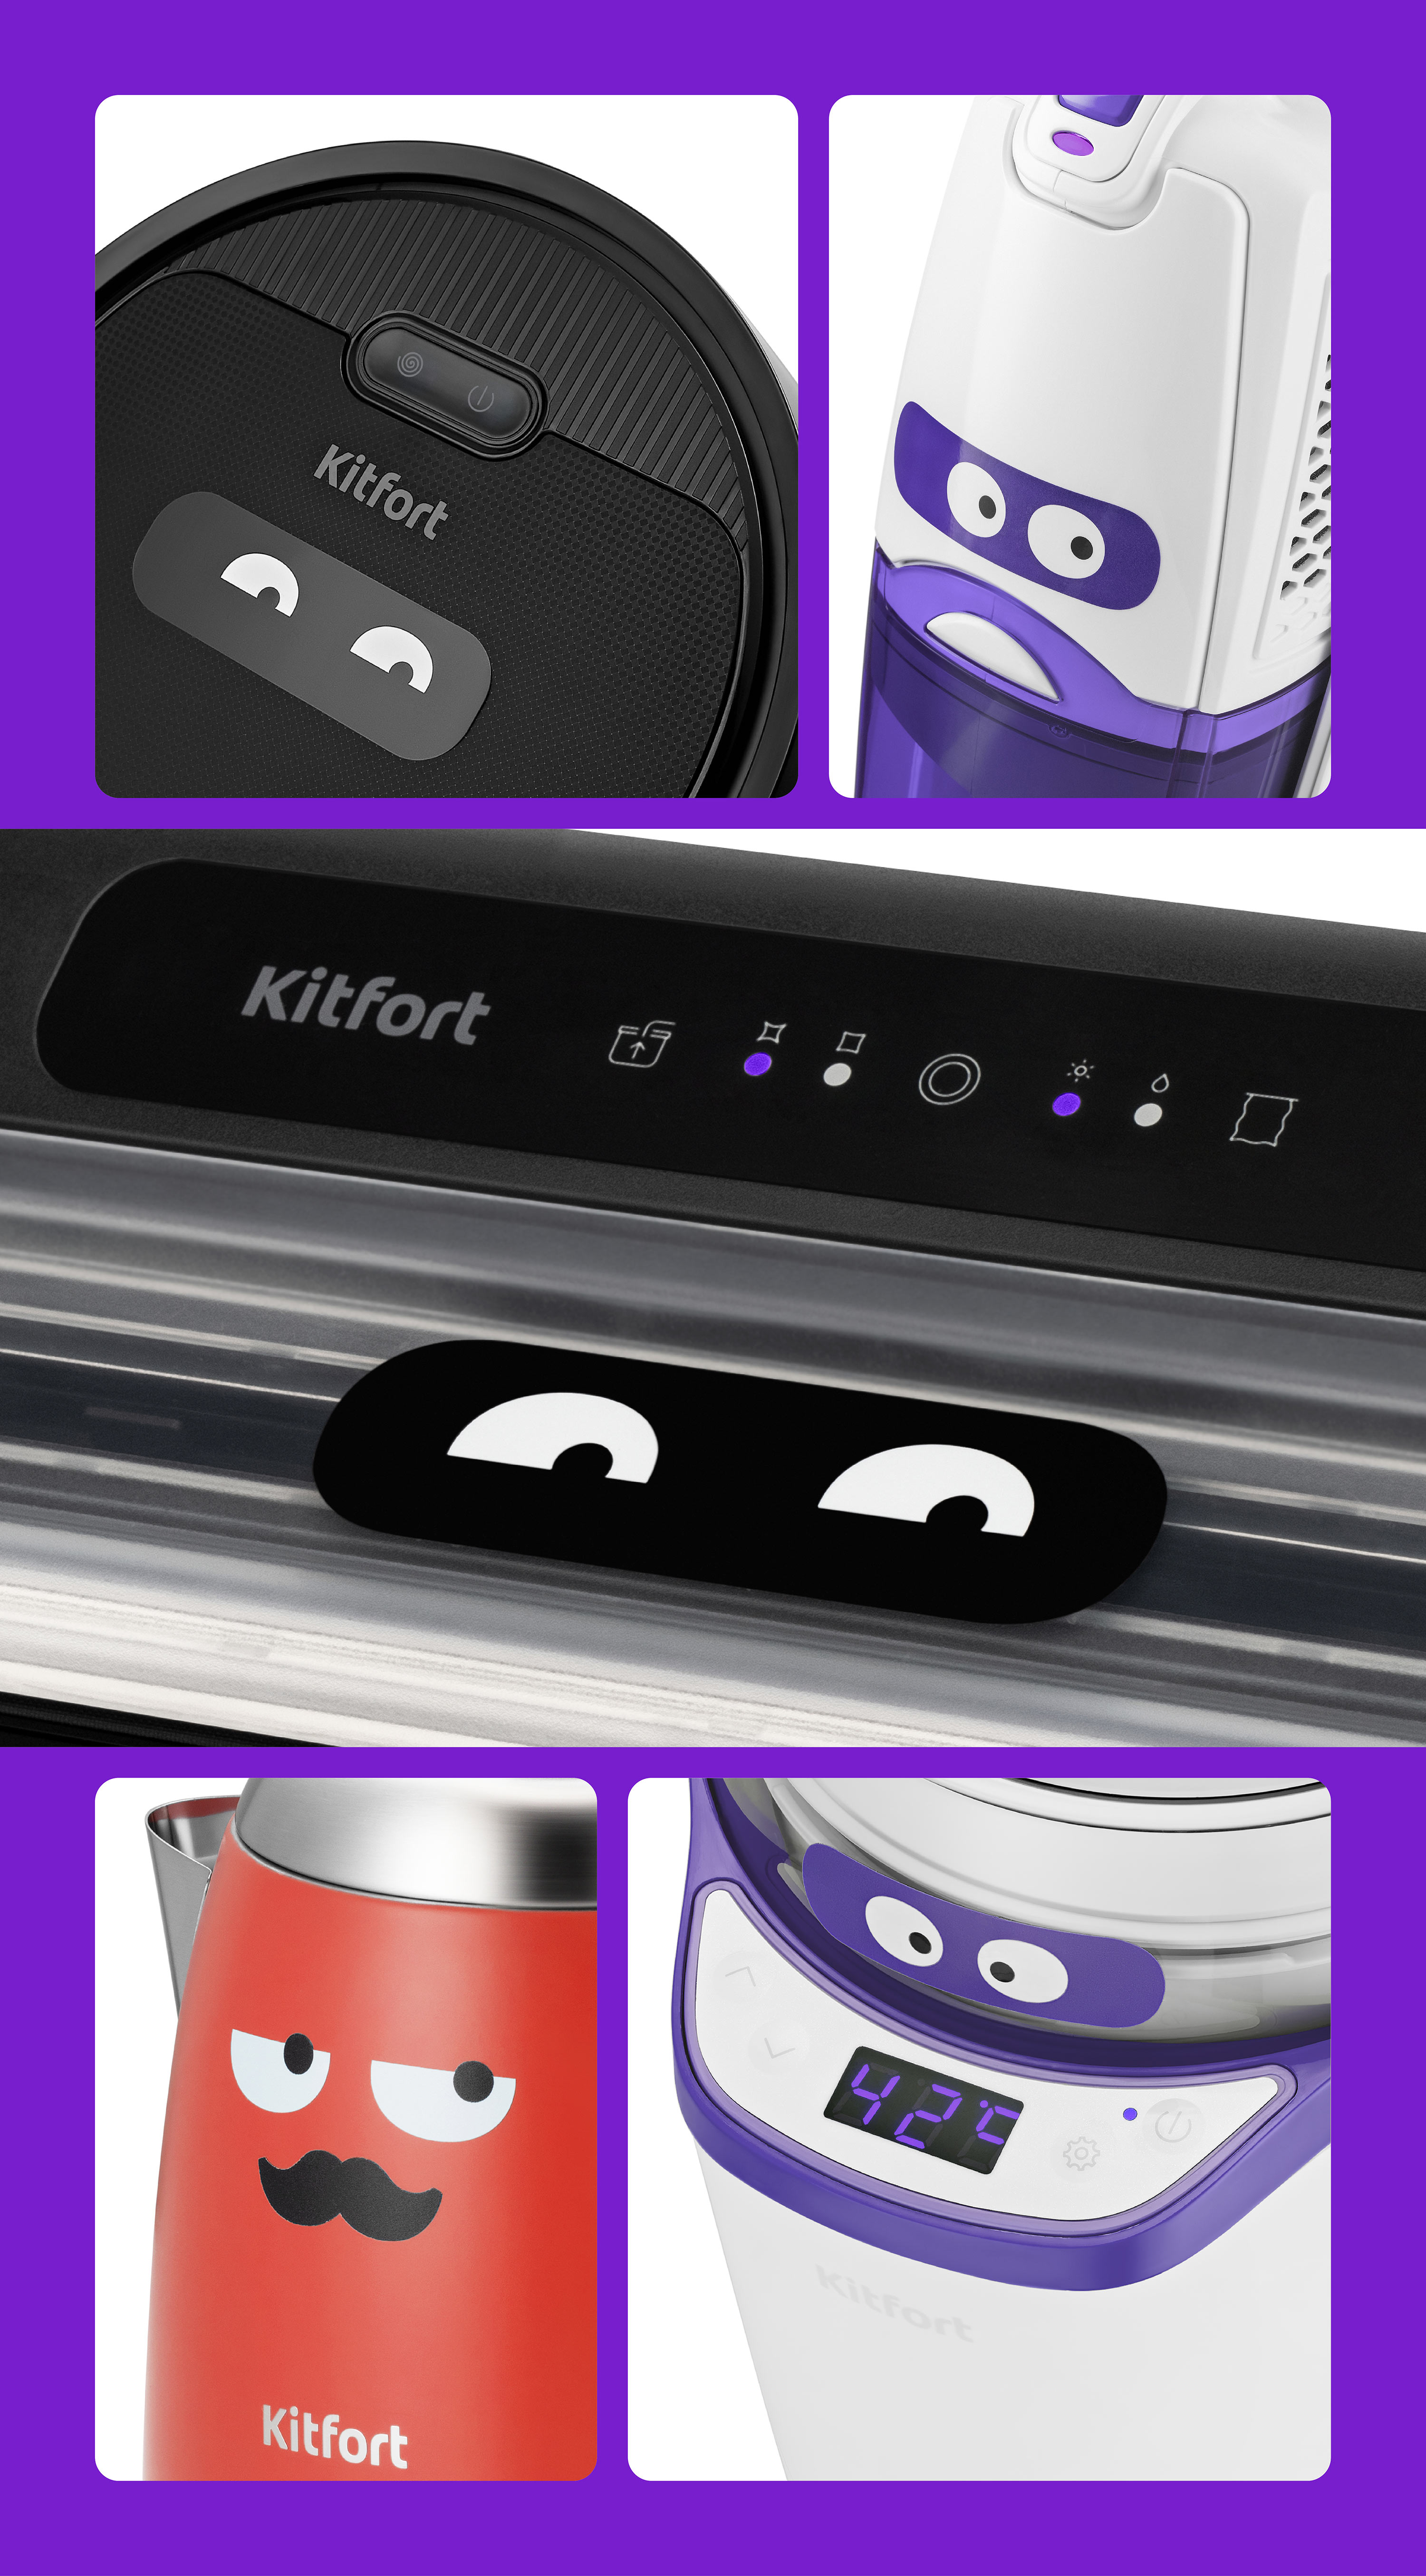 kitfort appliance eyes